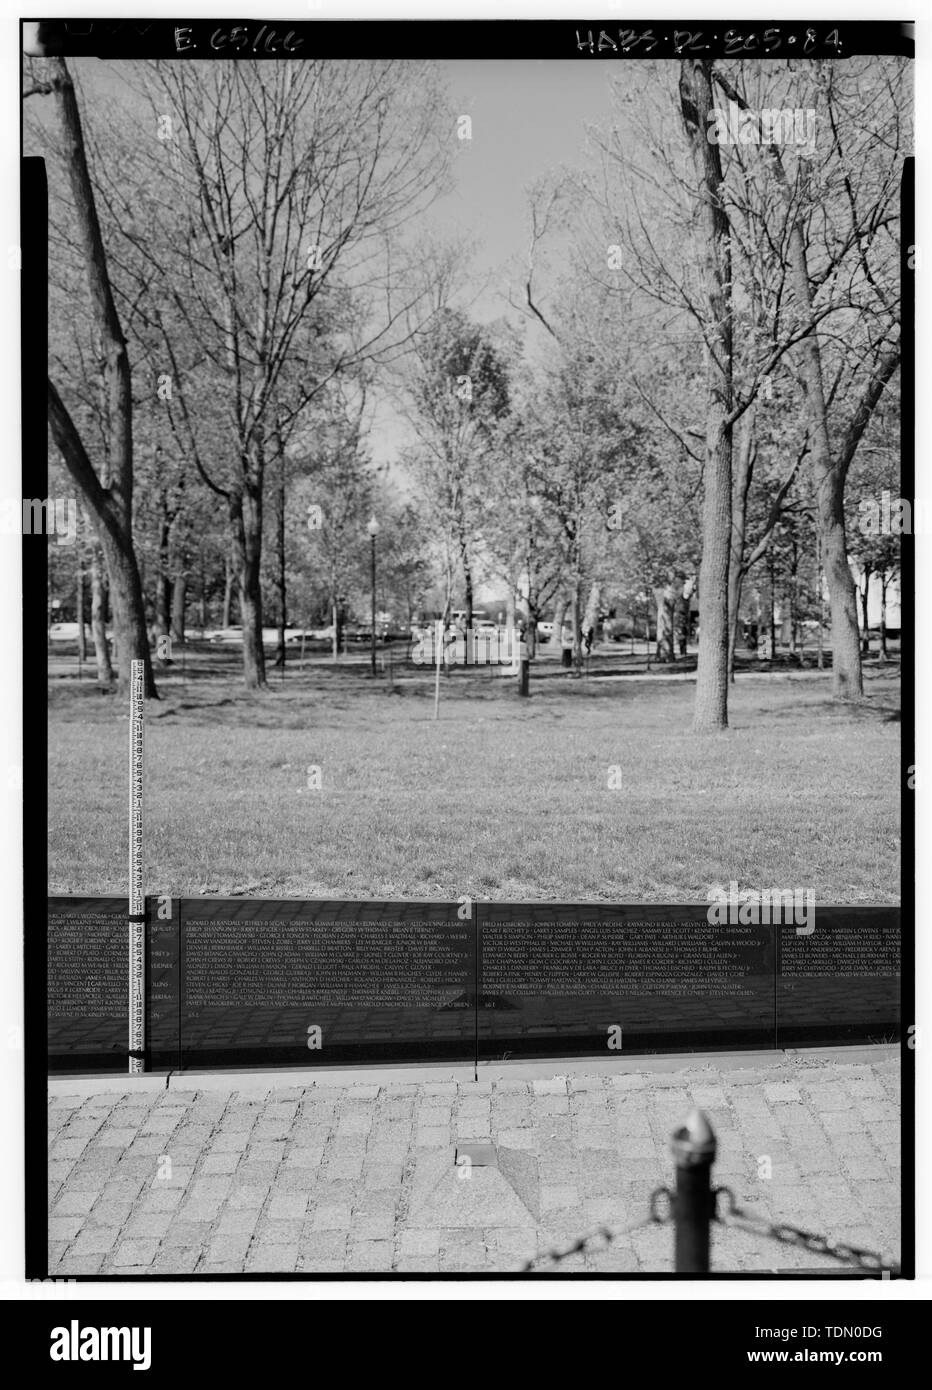 Vietnam Memorial Washington Black and White Stock Photos & Images - Alamy